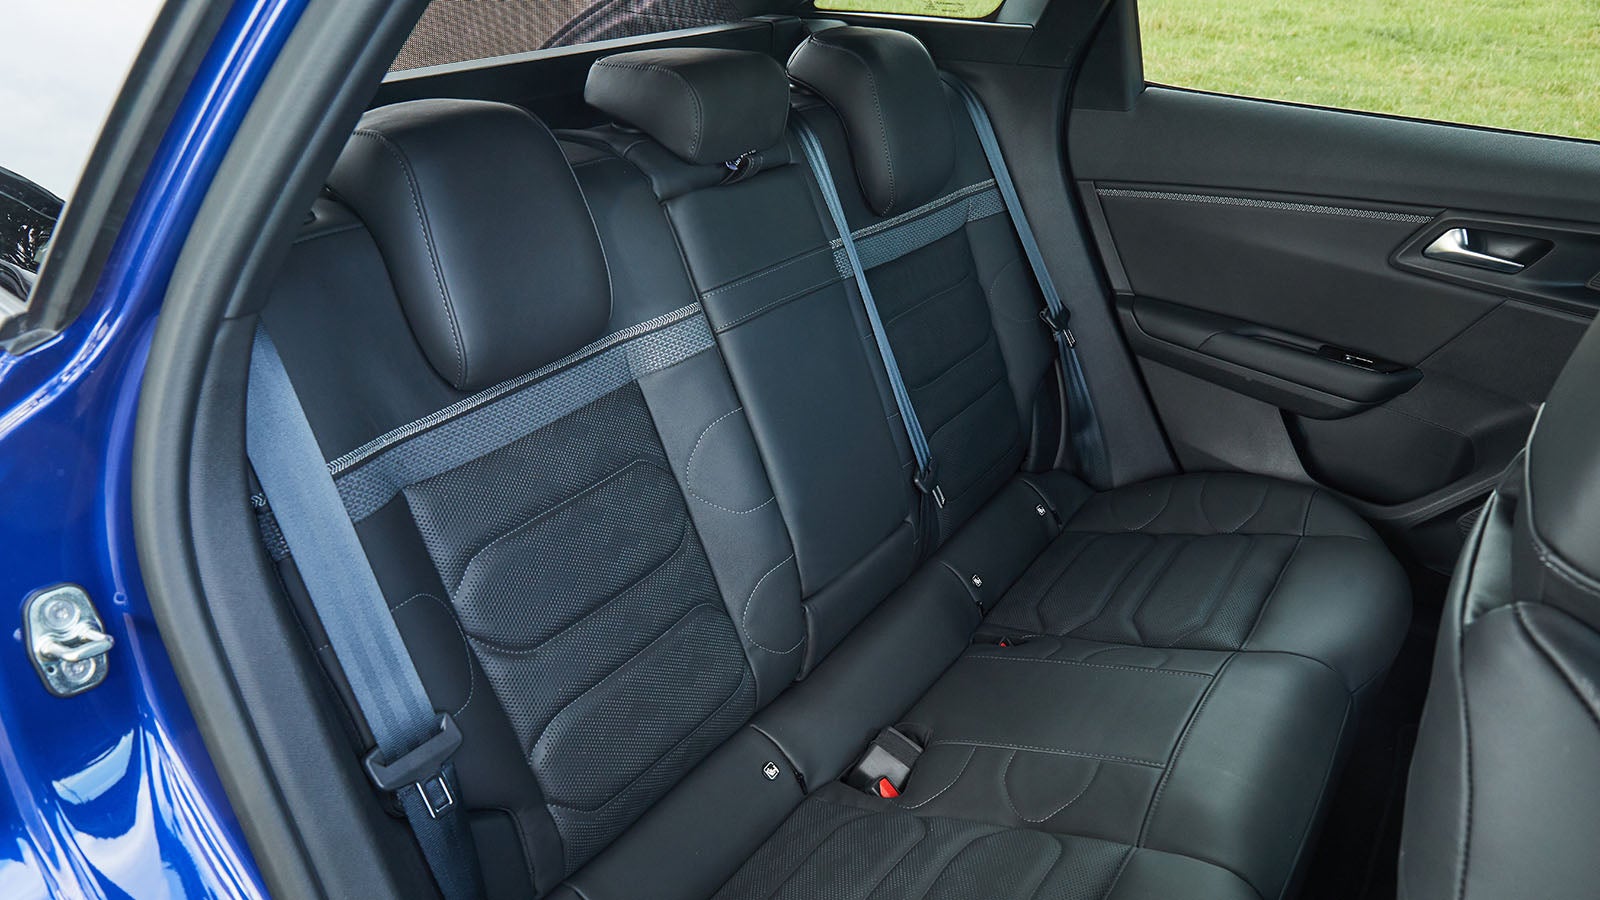 Citroen C5 X review image rear seats